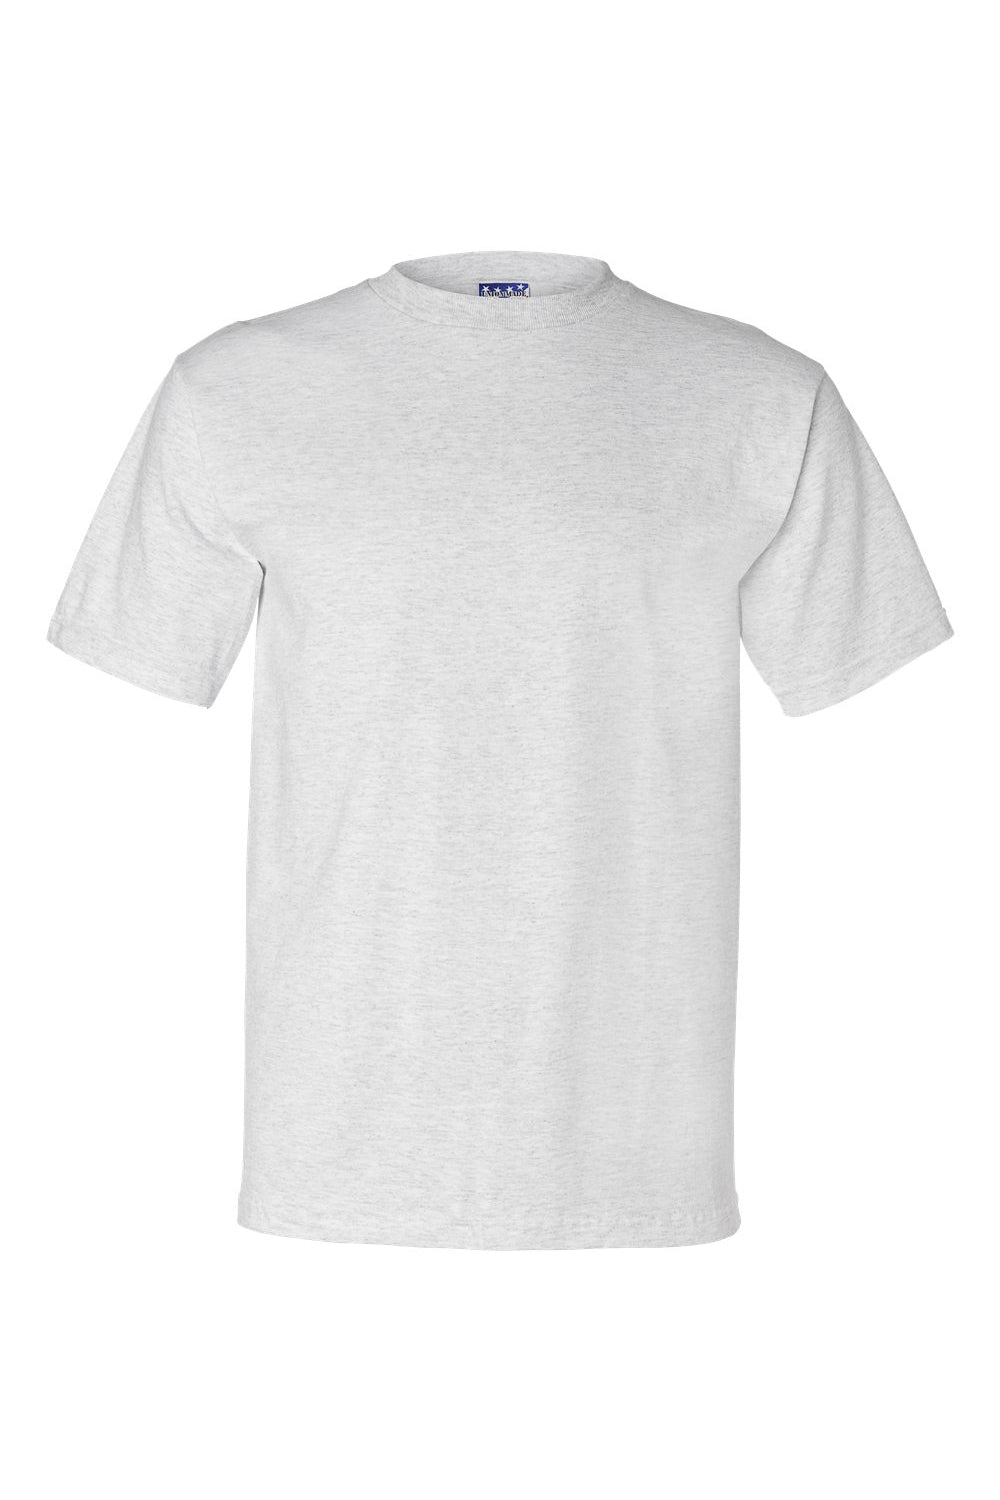 Bayside BA2905 Mens USA Made Short Sleeve Crewneck T-Shirt Ash Grey Flat Front